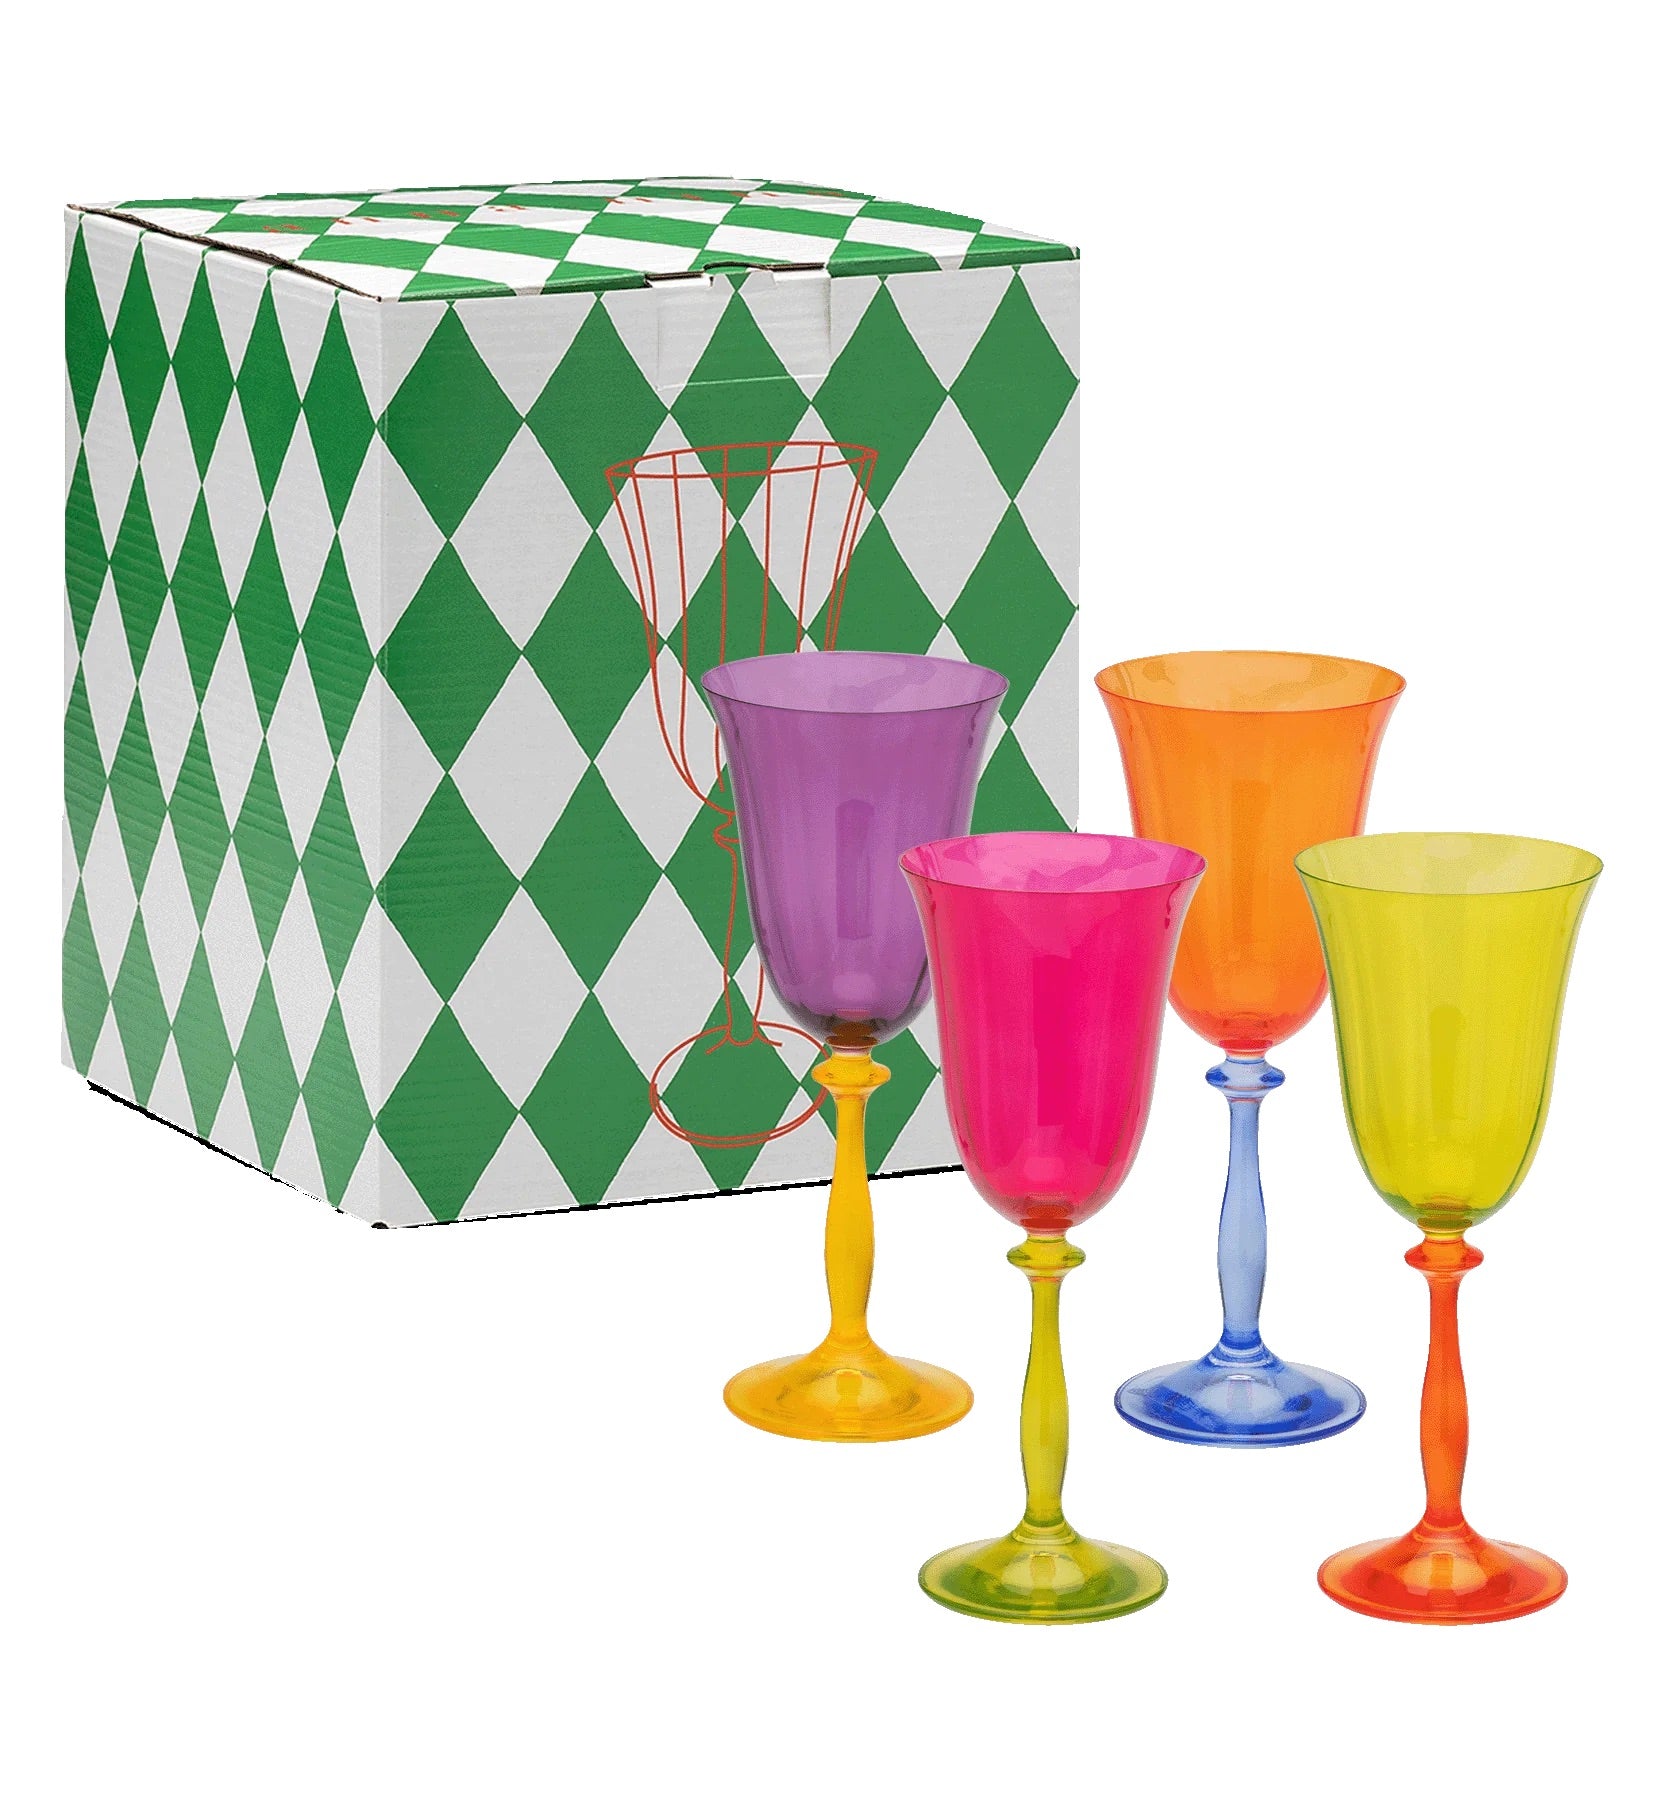 Multicoloured Wine Glass Set of 4